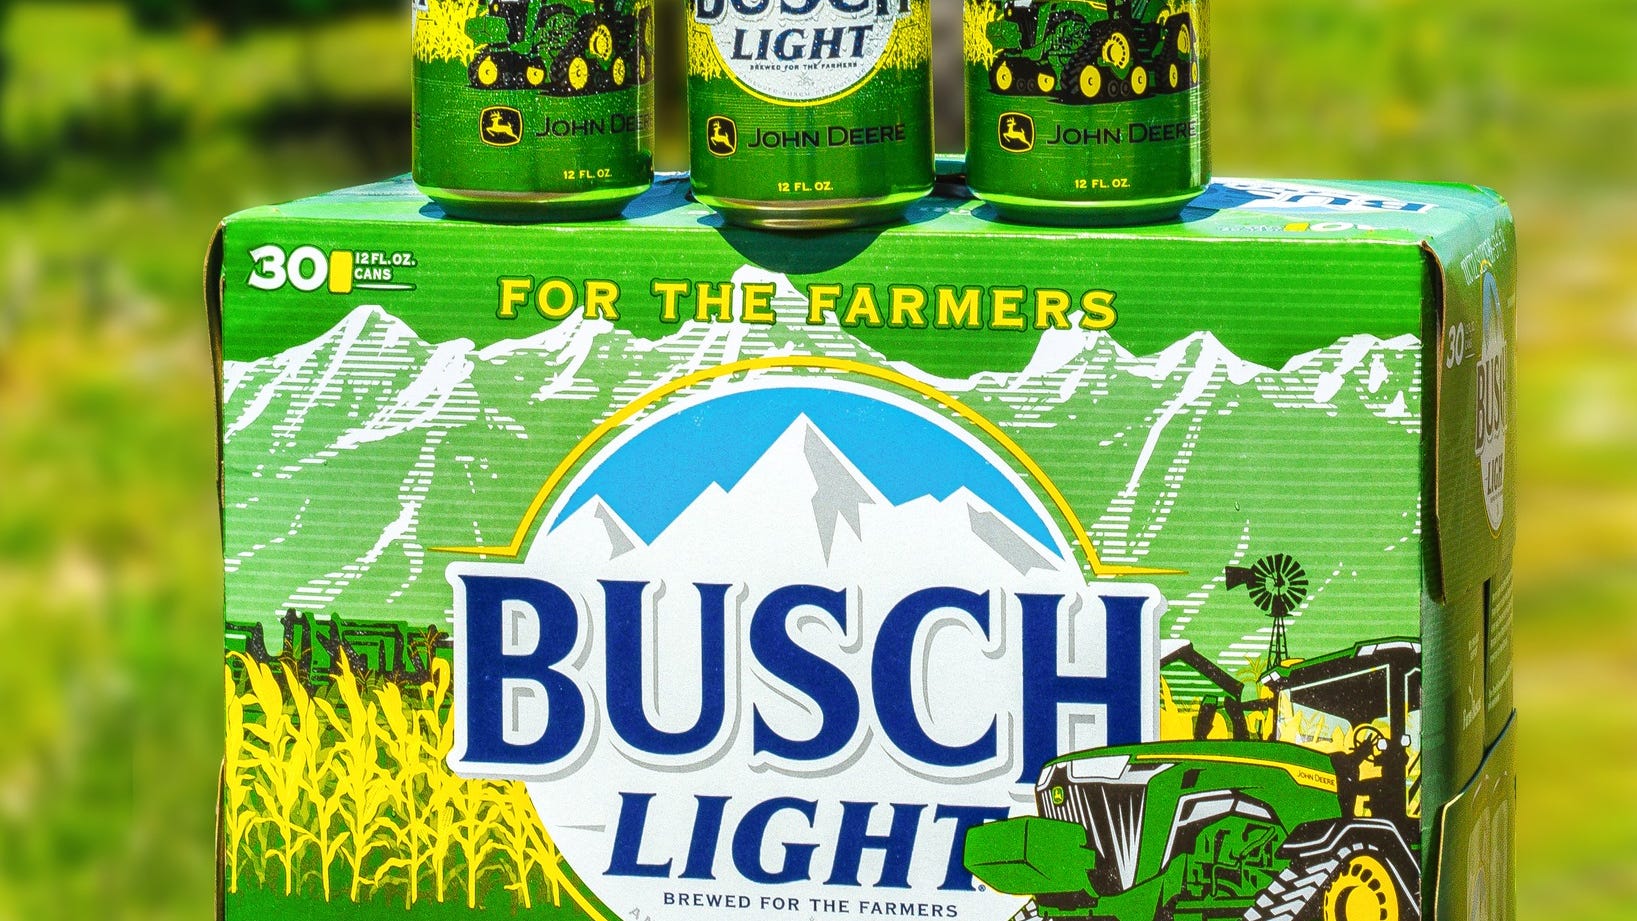 Busch LightJohn Deere beer cans help support American farmers